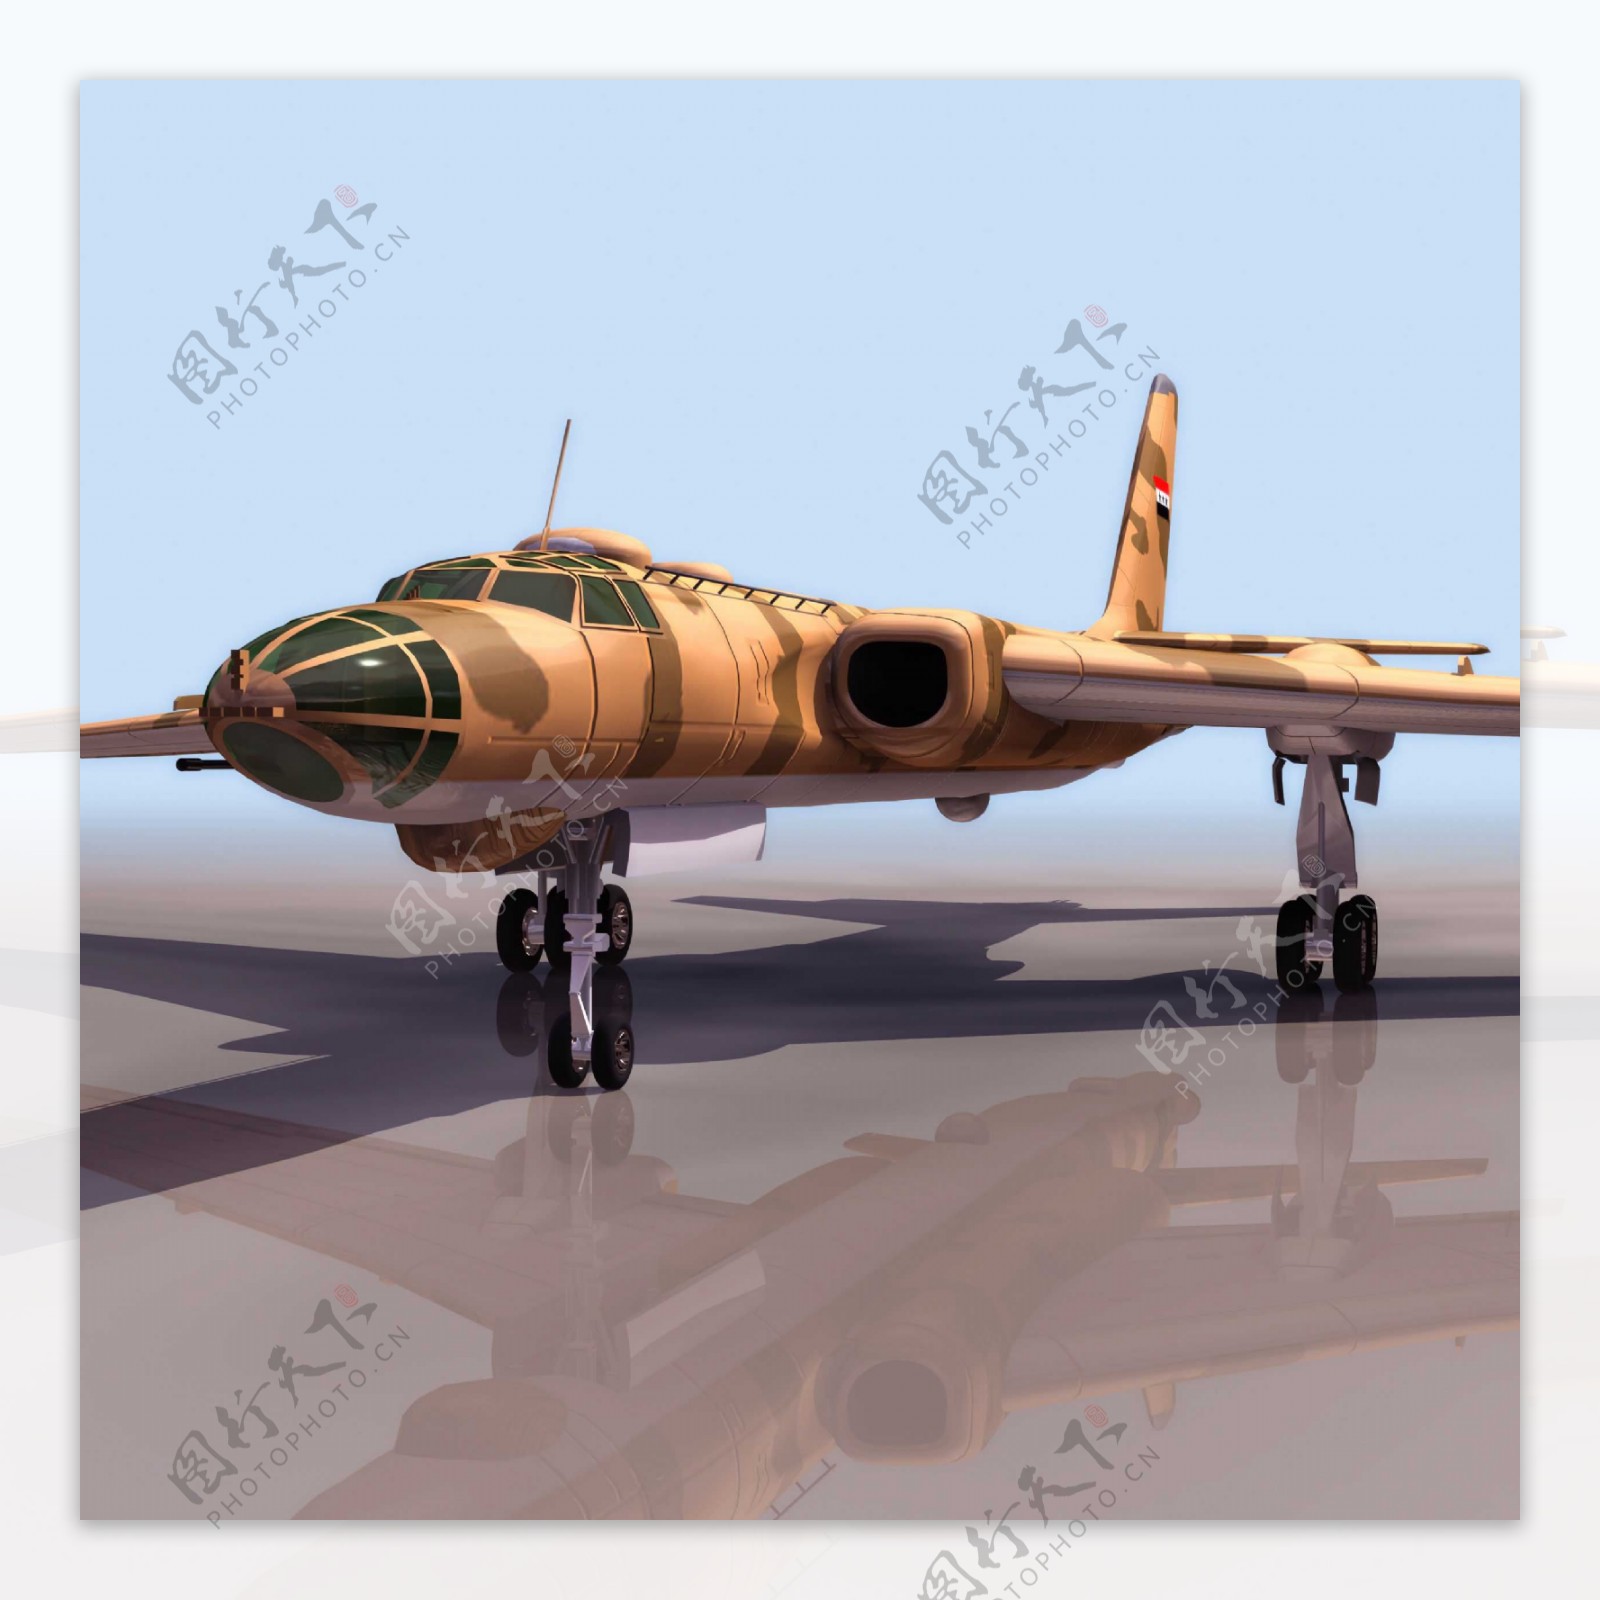 图16獾Tu16Badger中程轰炸机